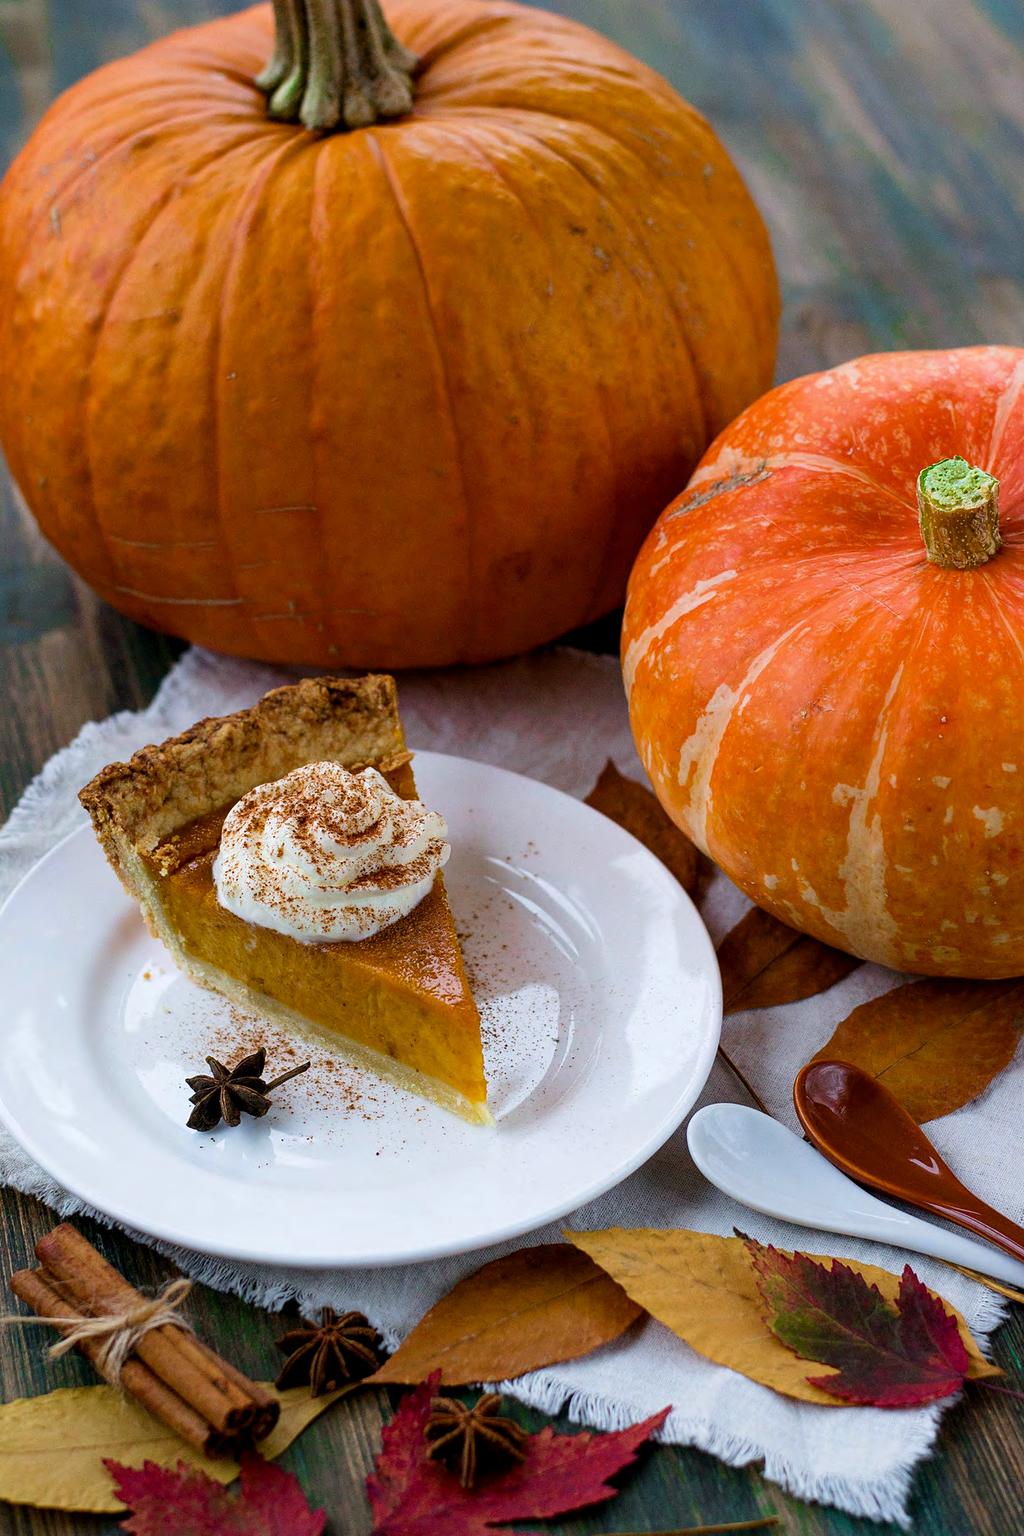 popular pies: Apple Pumpkin Pecan While each dinner